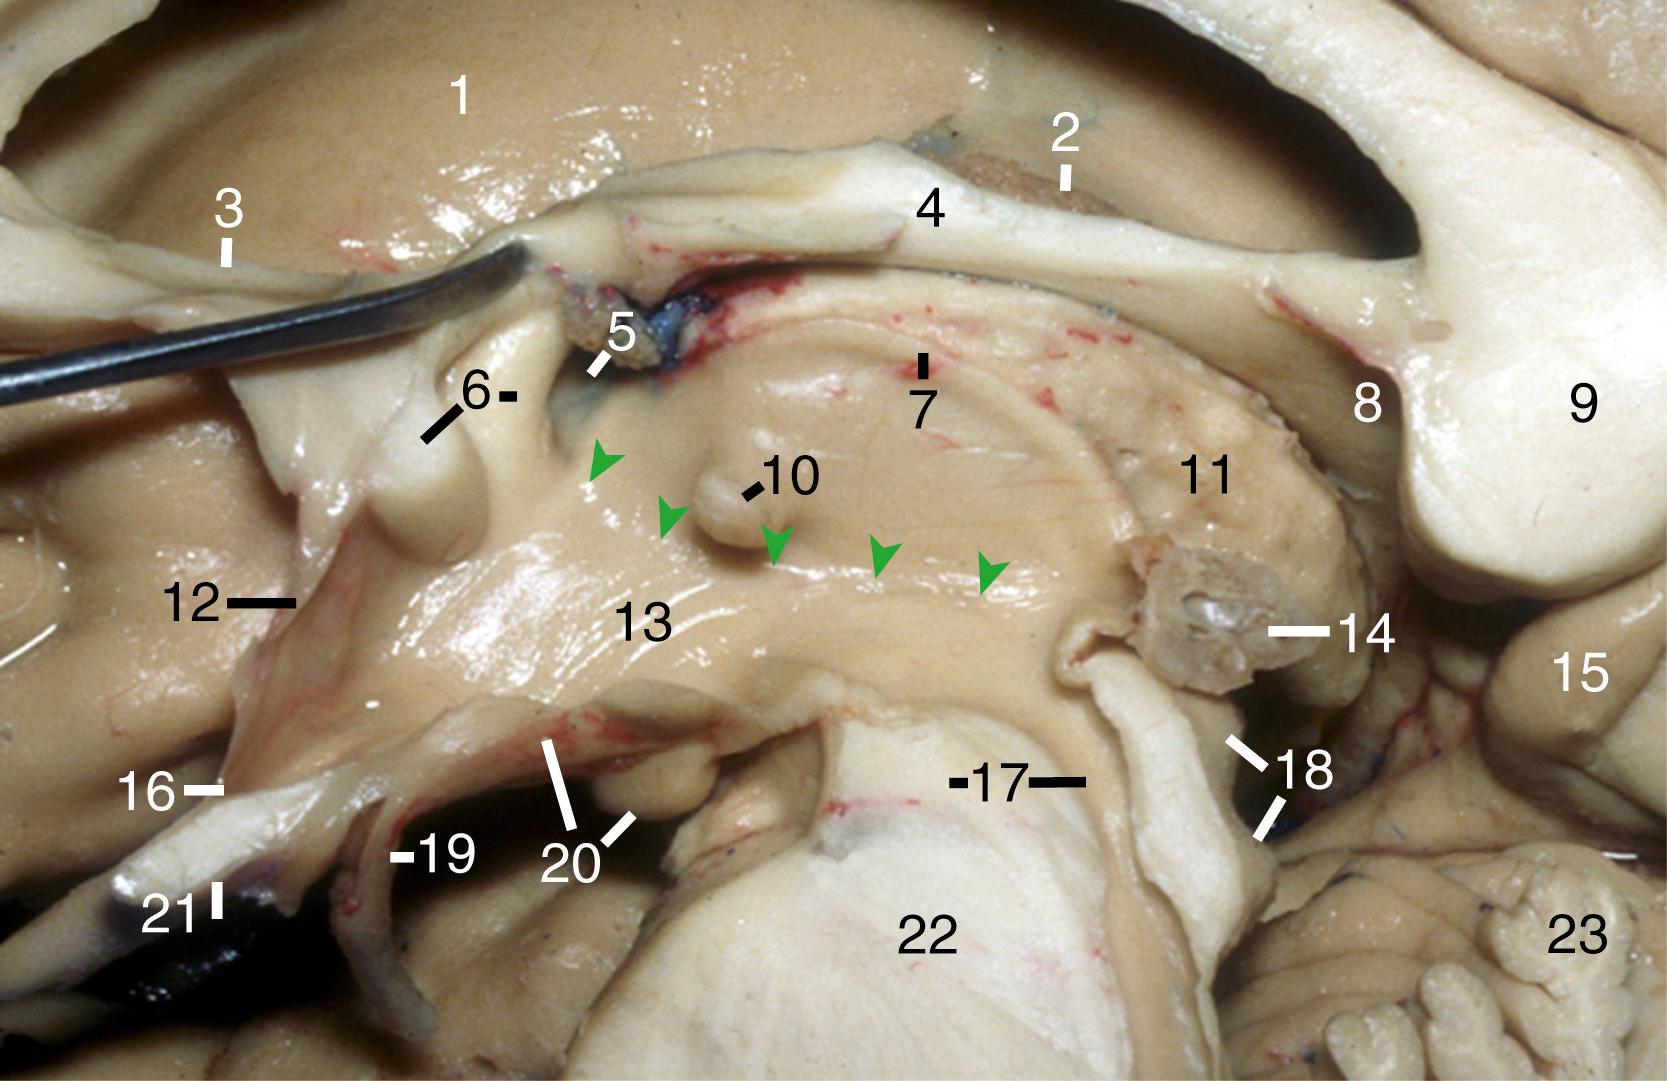 Figure 2.14, Midsagittal cut displaying the third ventricle. 1, Right caudate nucleus; 2, choroid plexus of right lateral ventricle; 3, rostrum of corpus callosum; 4, body of fornix; 5, foramen of Monro; 6, anterior commissure and column of fornix; 7, striae medullary thalami; 8, crus of fornix; 9, splenium of corpus callosum; 10, massa intermedia; 11, thalamus; 12, lamina terminalis; 13, hypothalamus; 14, pineal gland; 15, isthmus of cingulate gyrus; 16, optic recess; 17, midbrain and aqueduct; 18, superior and inferior colliculi; 19, pituitary stalk; 20, tuber cinereum and mammillary body; 21, optic chiasm; 22, pons; 23, culmen of cerebellum. Green dots indicate hypothalamic sulcus.